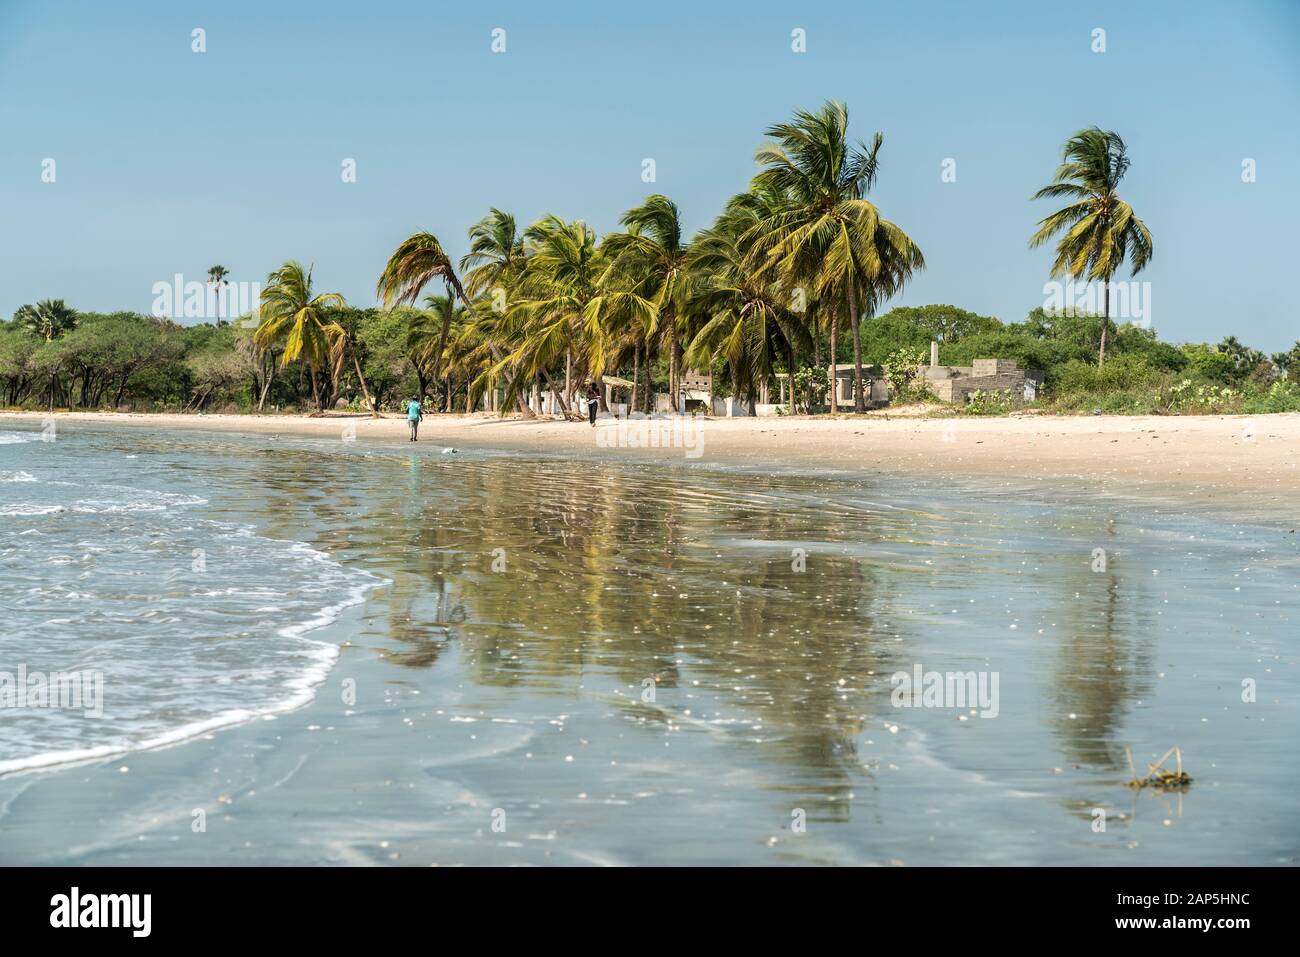 Palmen am Strand von Sanyang, Gambia, Westafrika  | palm trees at the beach  Sanyang, Gambia, West Africa, Stock Photo